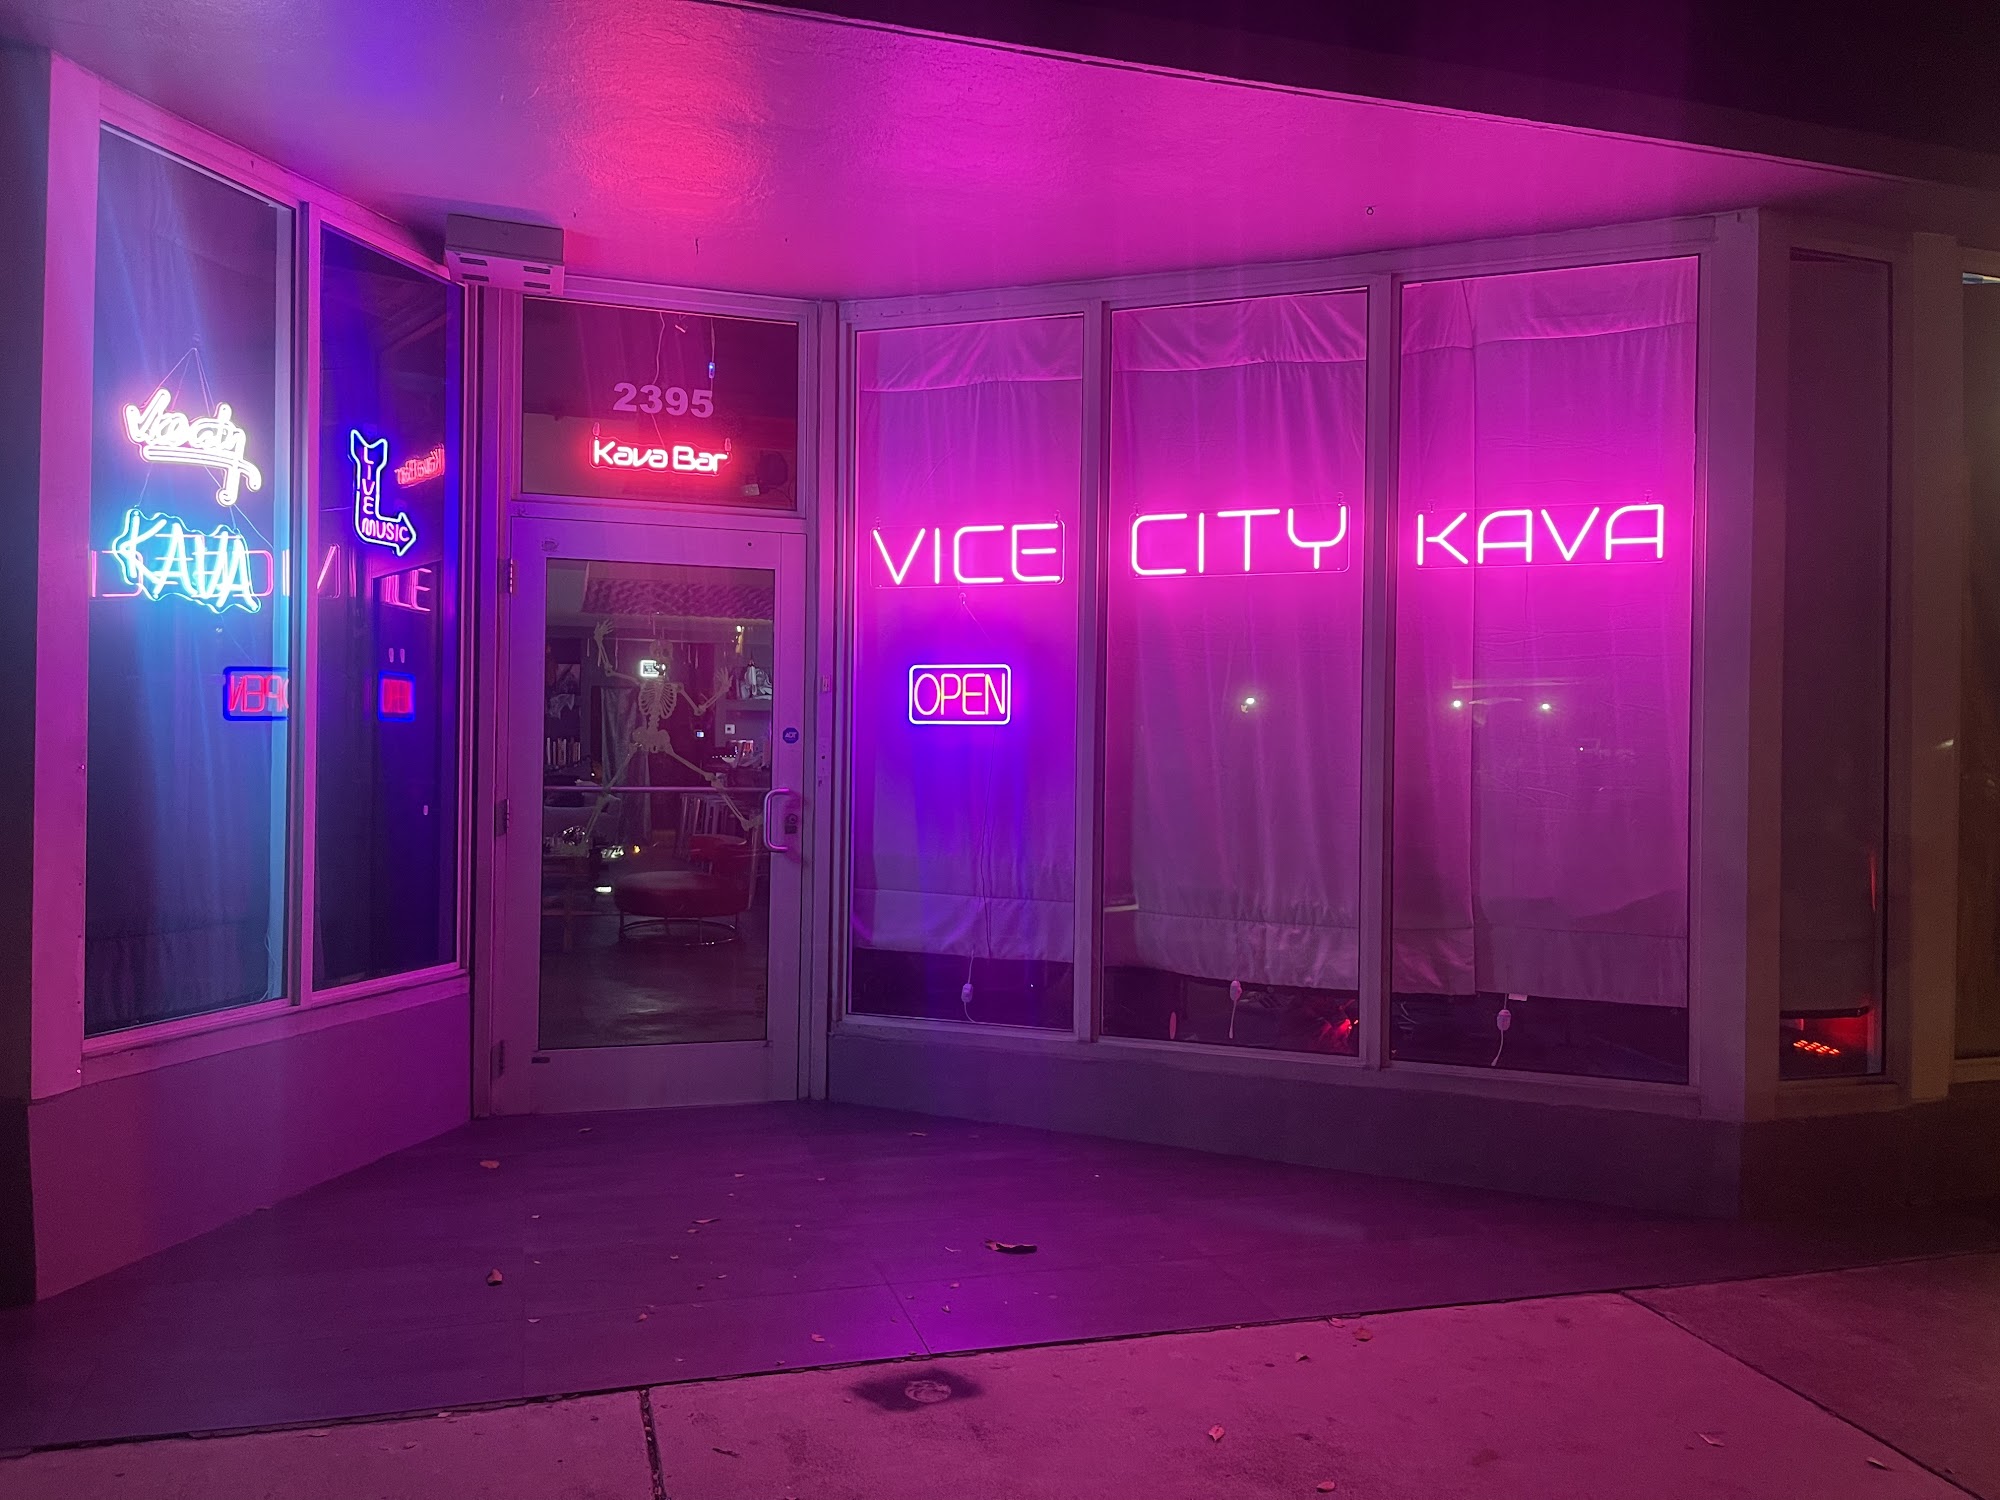 Vice City Kava - Coral Gables